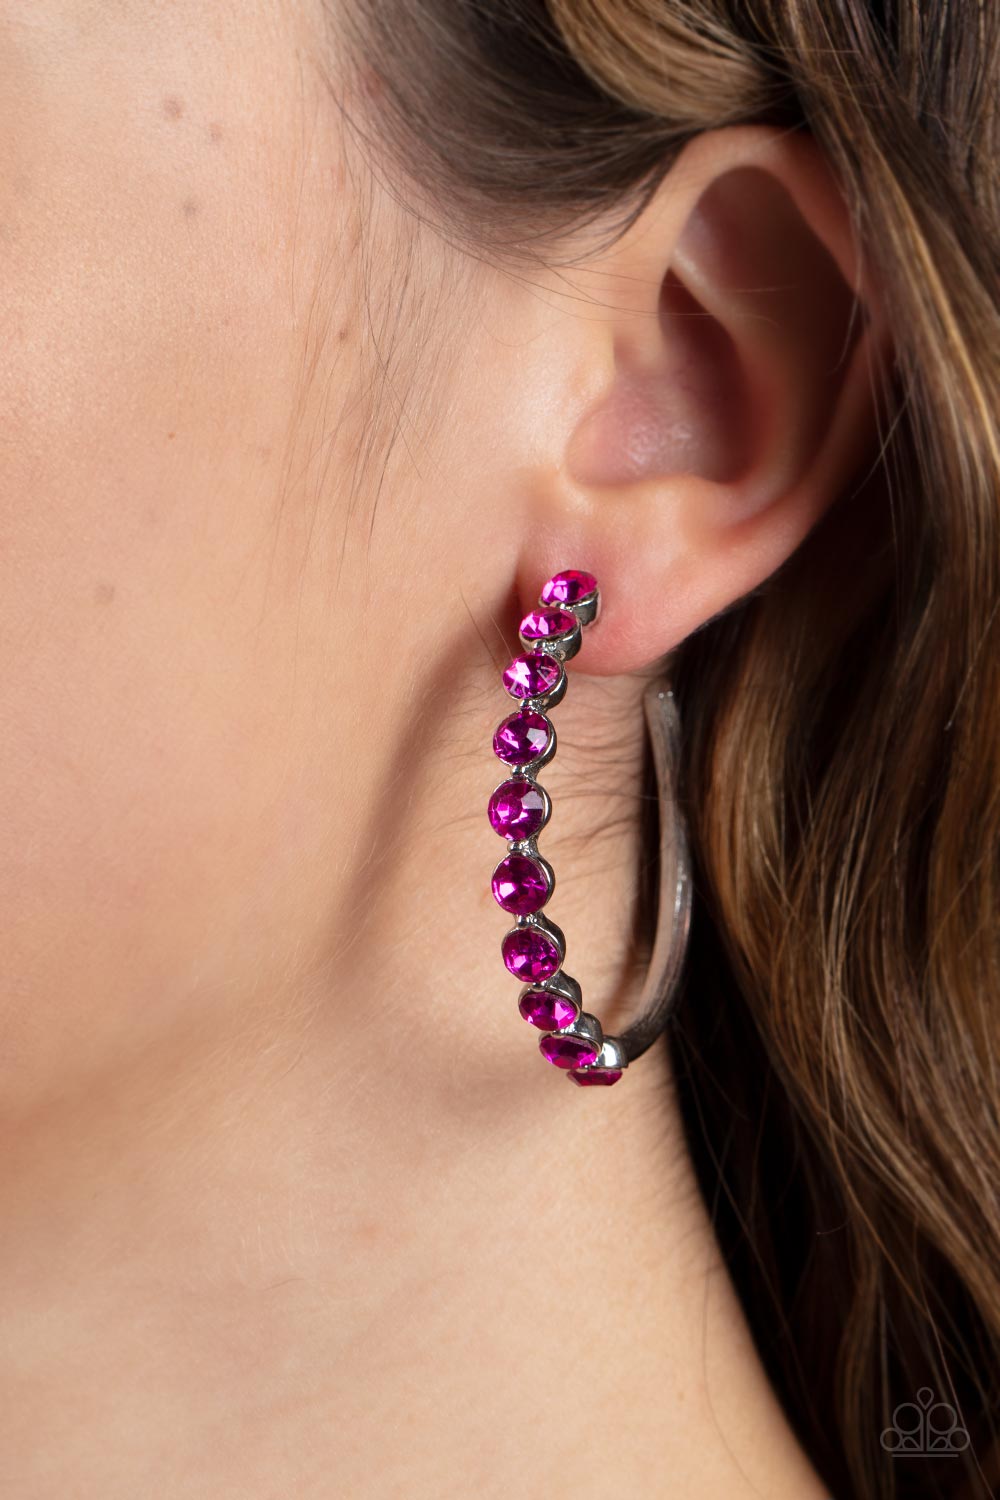 Photo Finish - Pink Earrings - Paparazzi Accessories - Paparazzi Accessories 